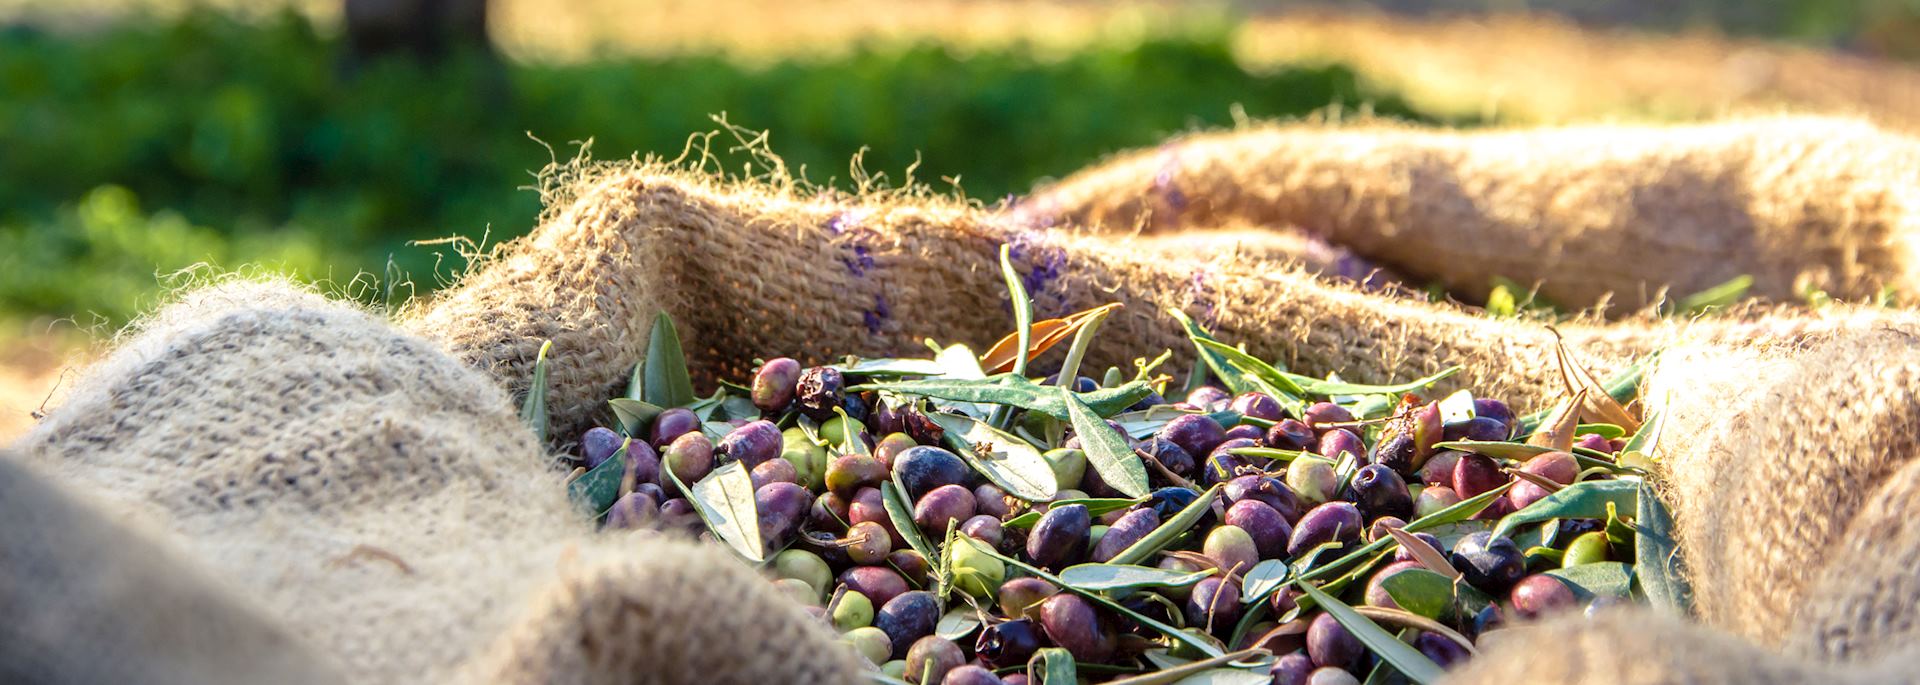 Harvested fresh olives, Crete